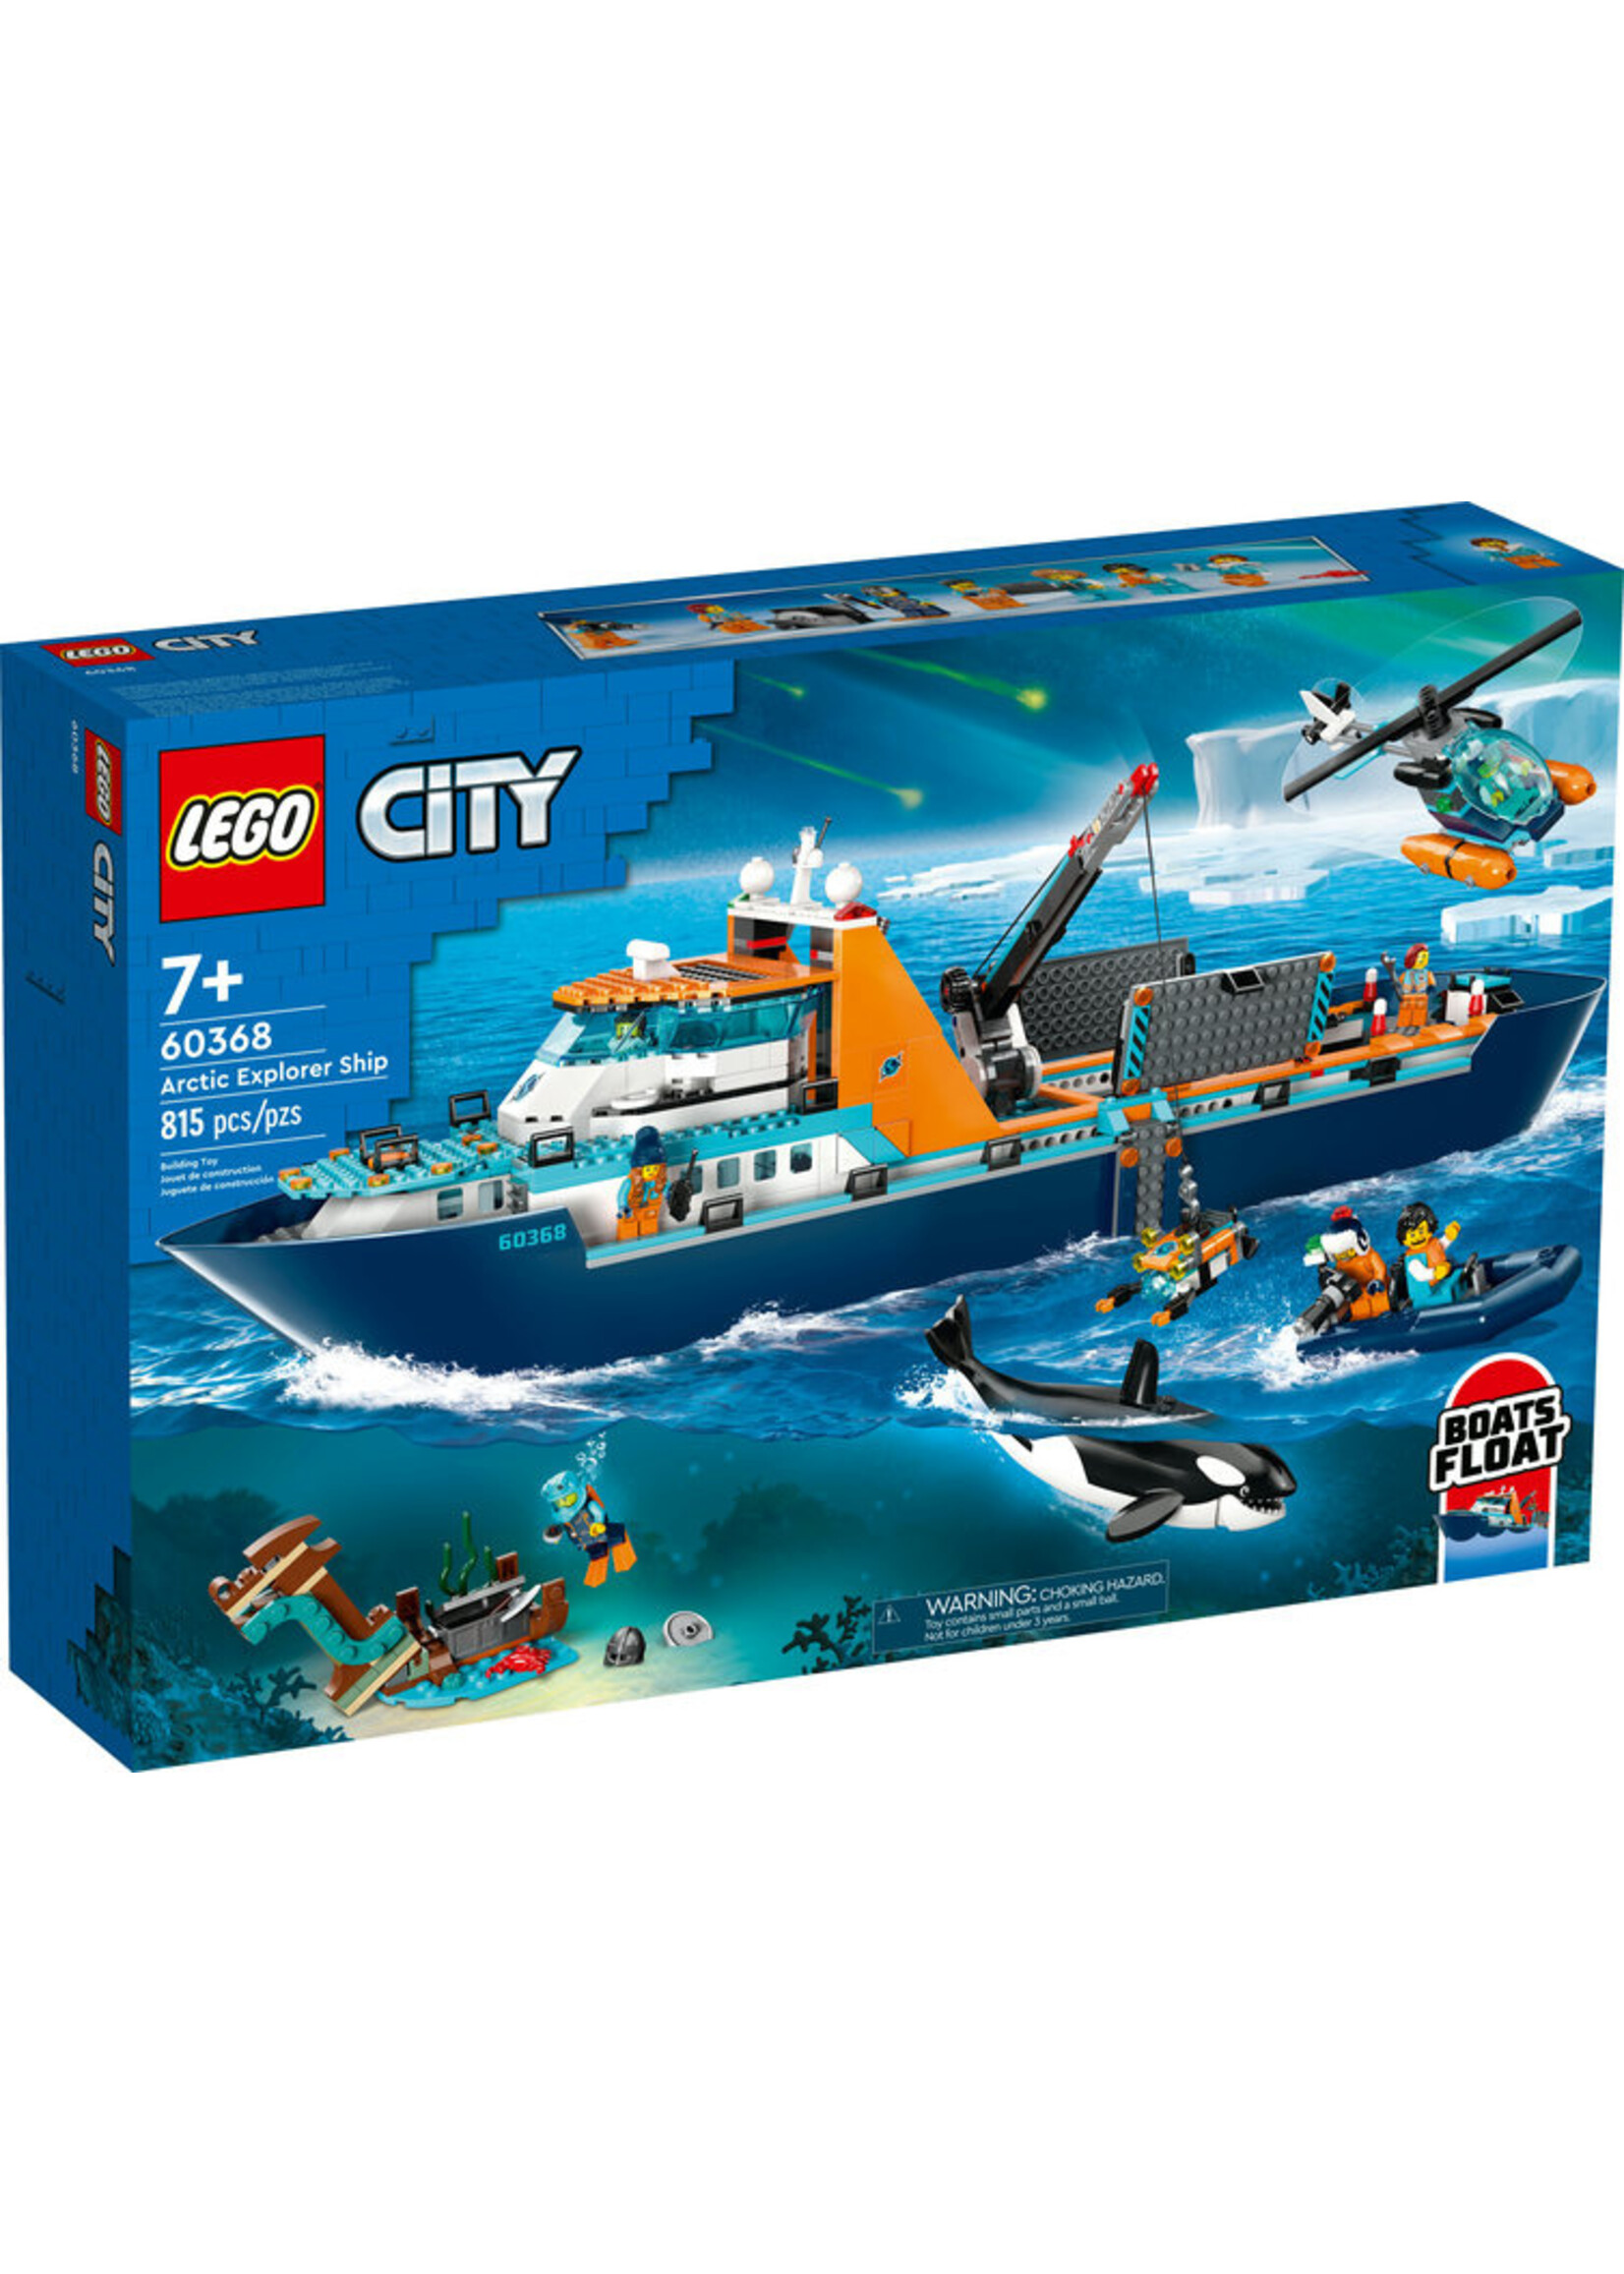 LEGO 60368 - Arctic Explorer Ship